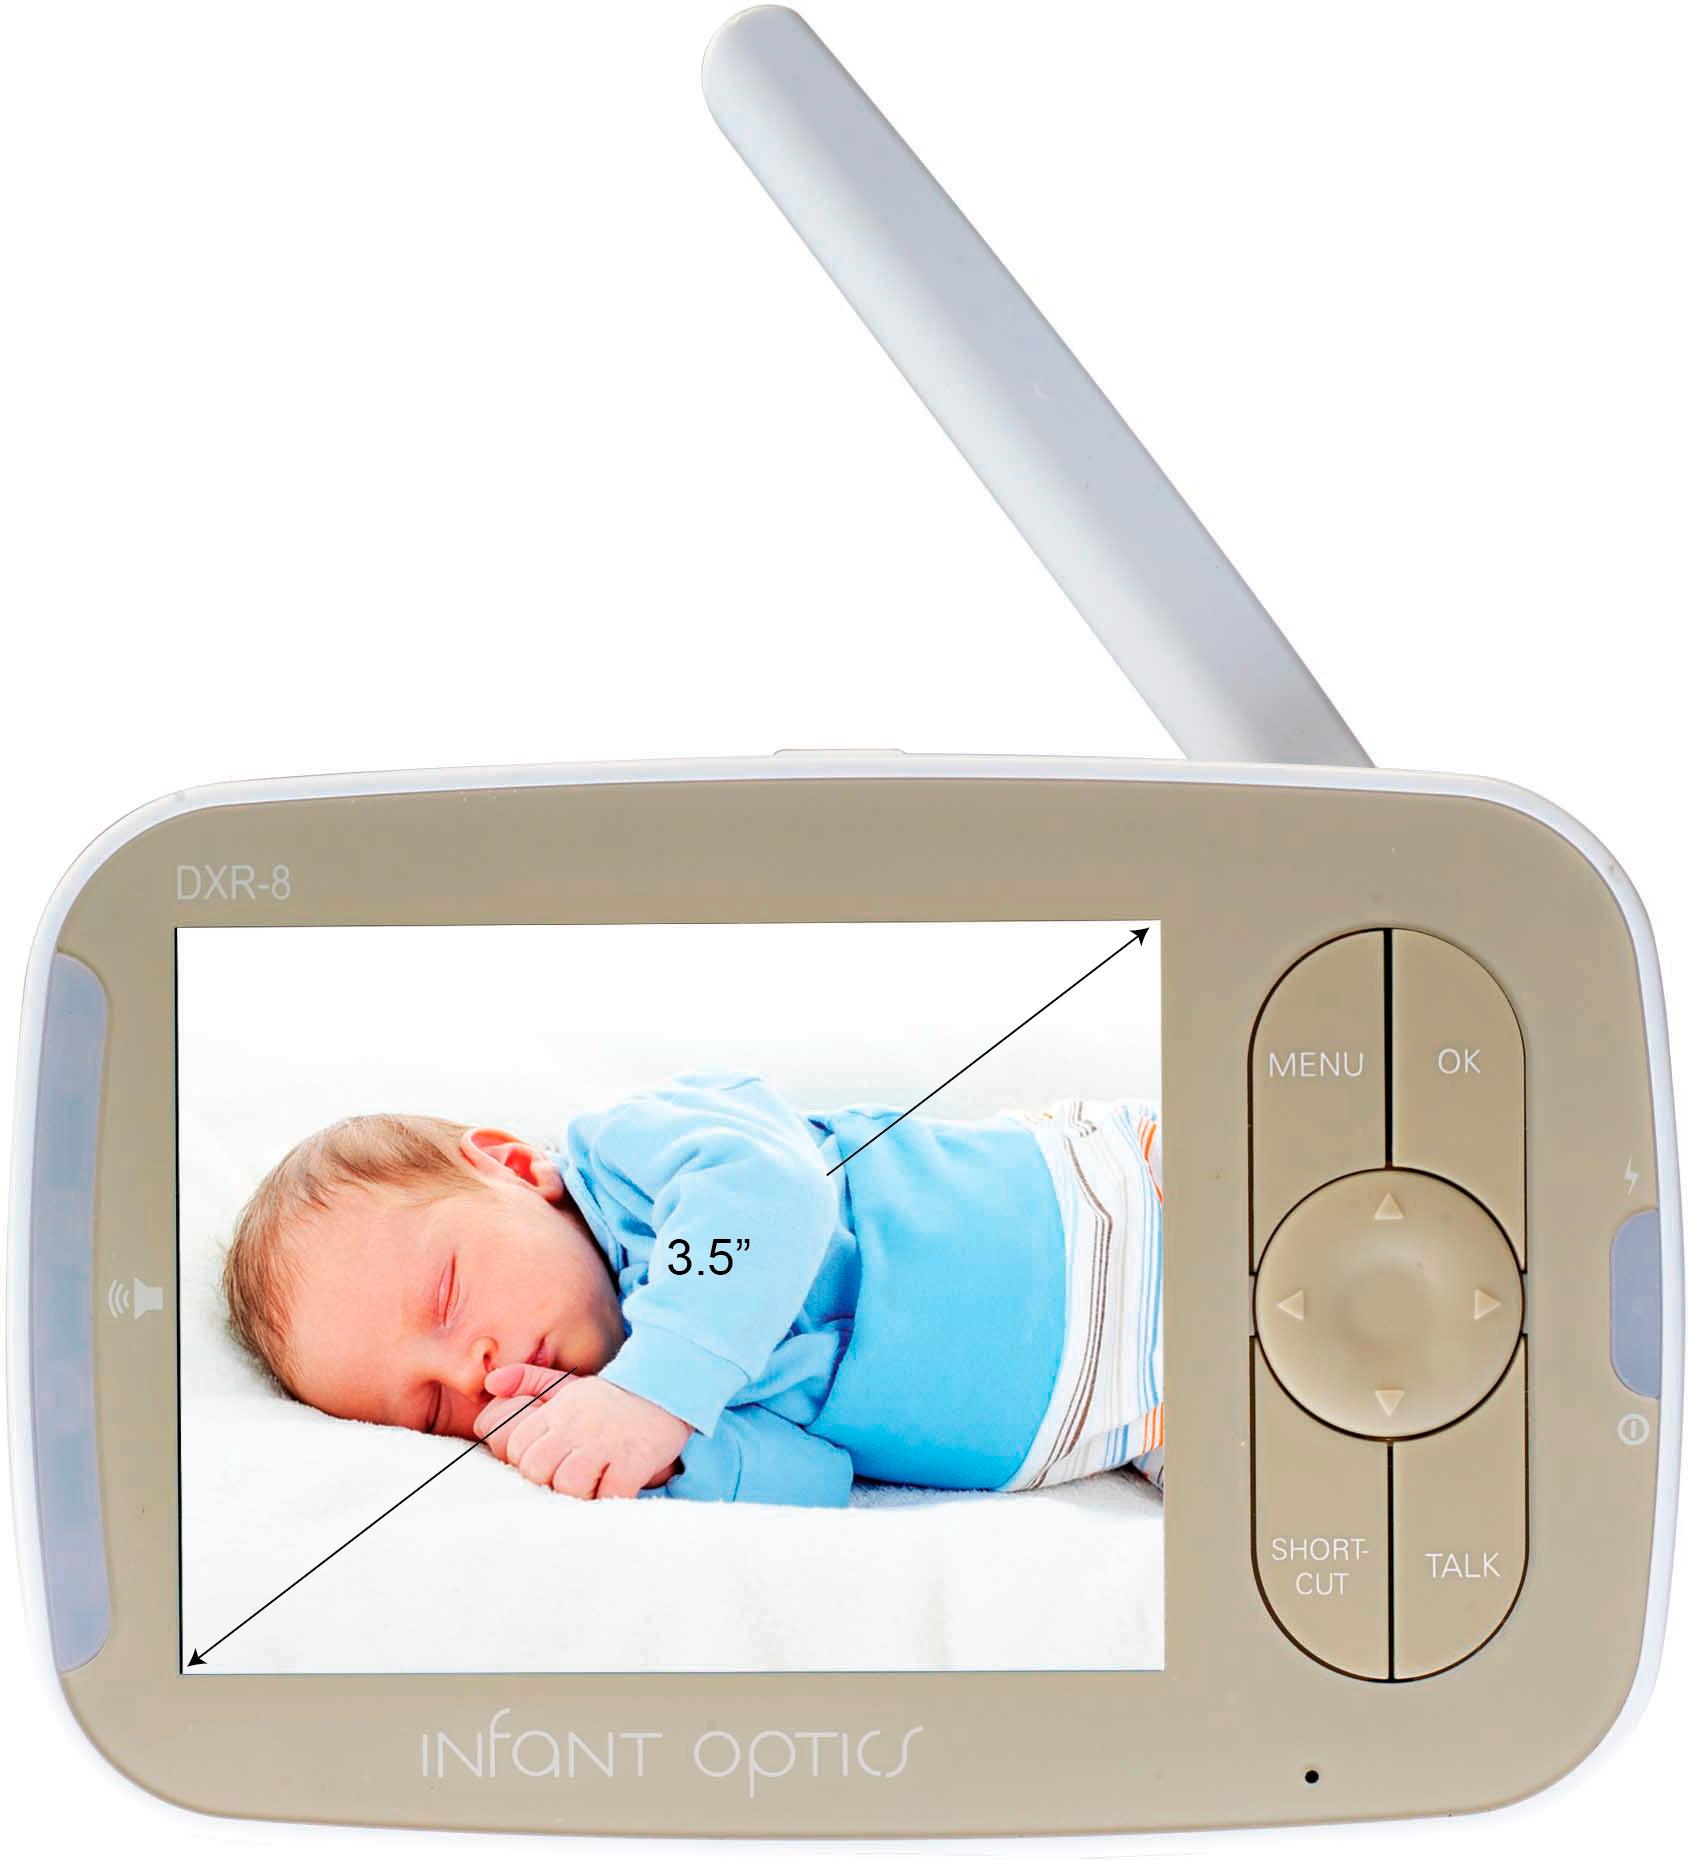 Infant Optics DXR-8 Pan/Tilt/Zoom 3.5 Video Baby Monitor with Interchangeable Optical lens 